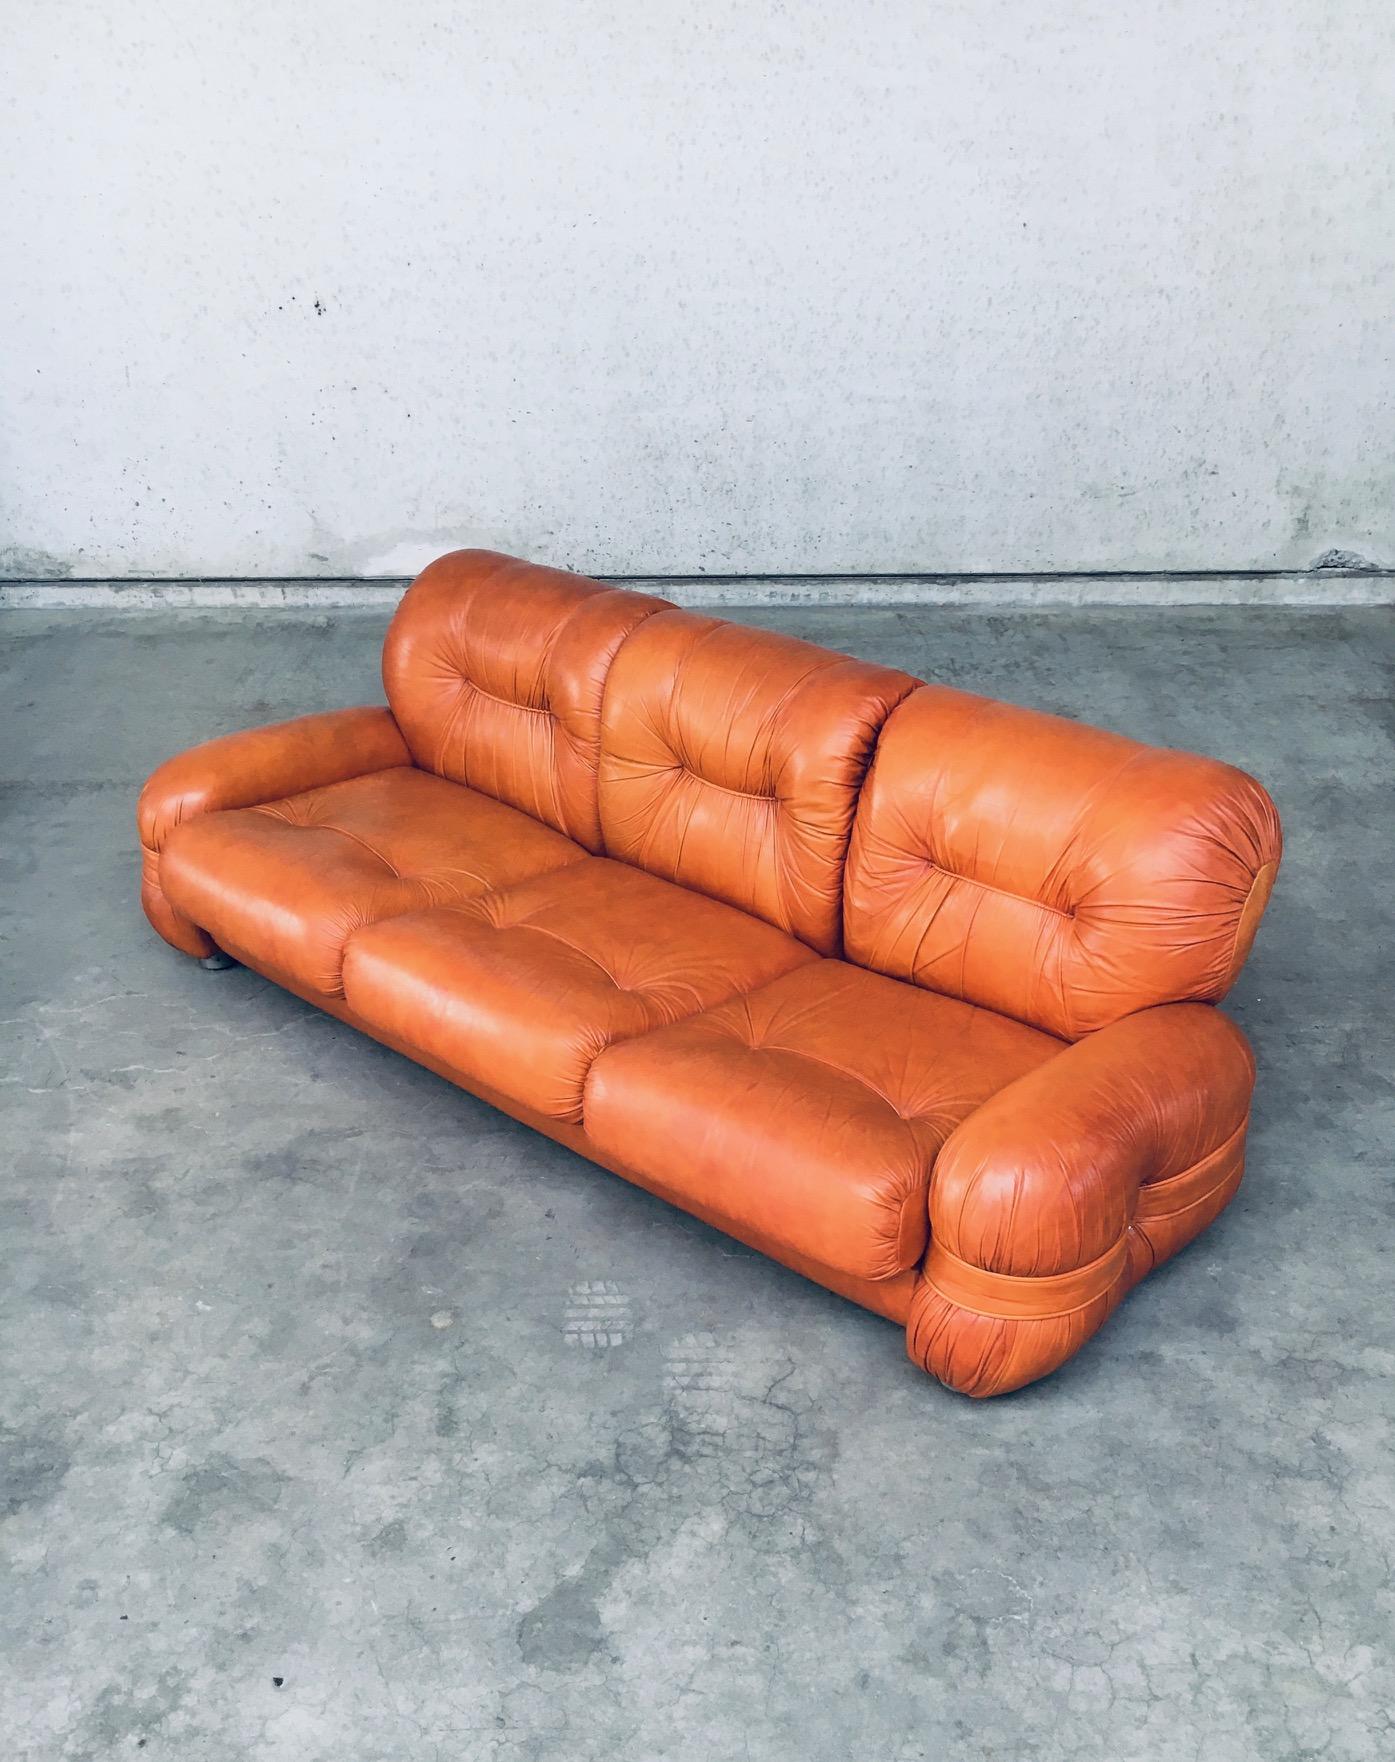 70's style sofa